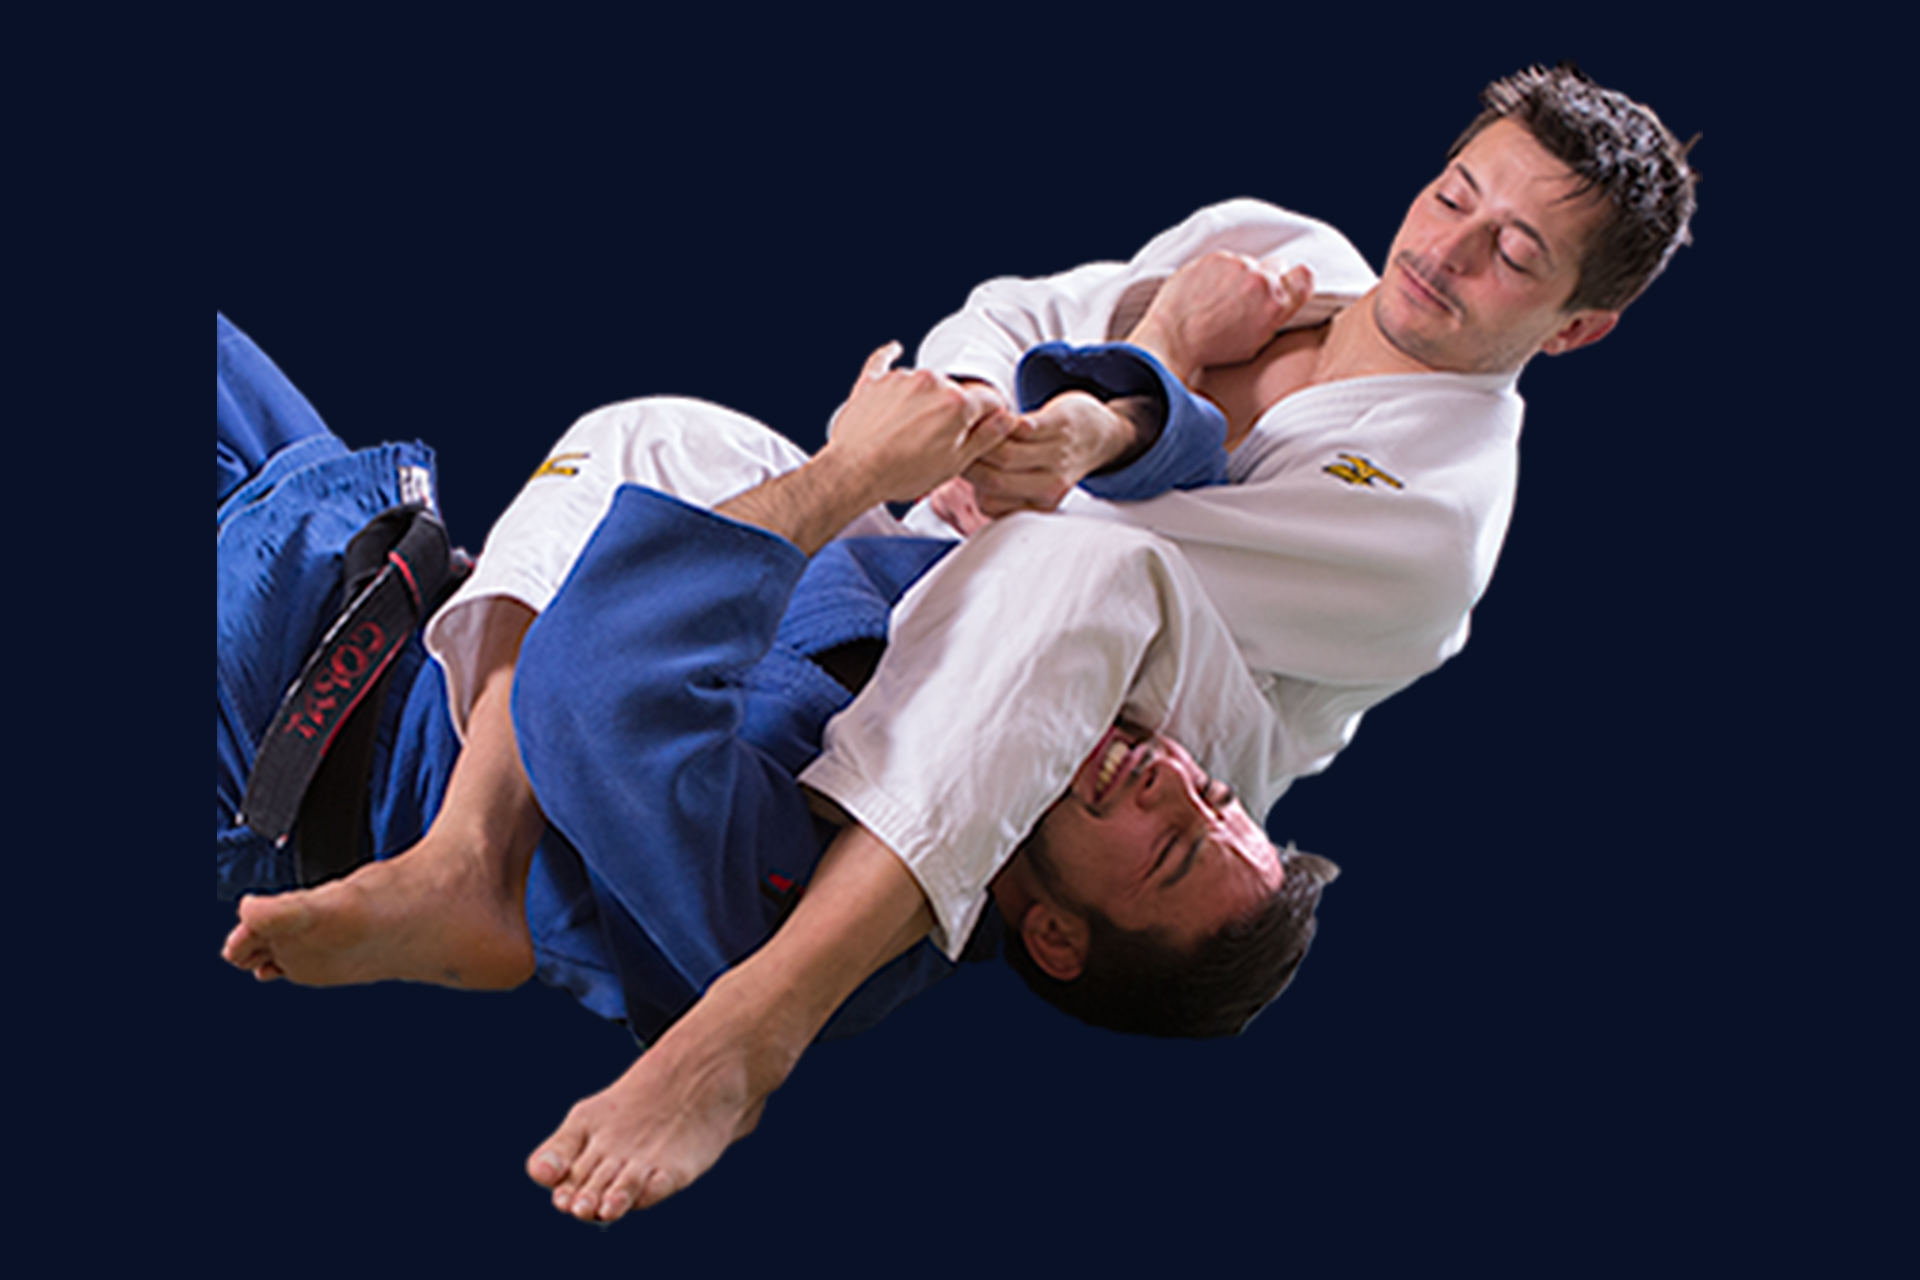 //www.skorpionpn.com/wp-content/uploads/2018/02/corso-judo-1.jpg